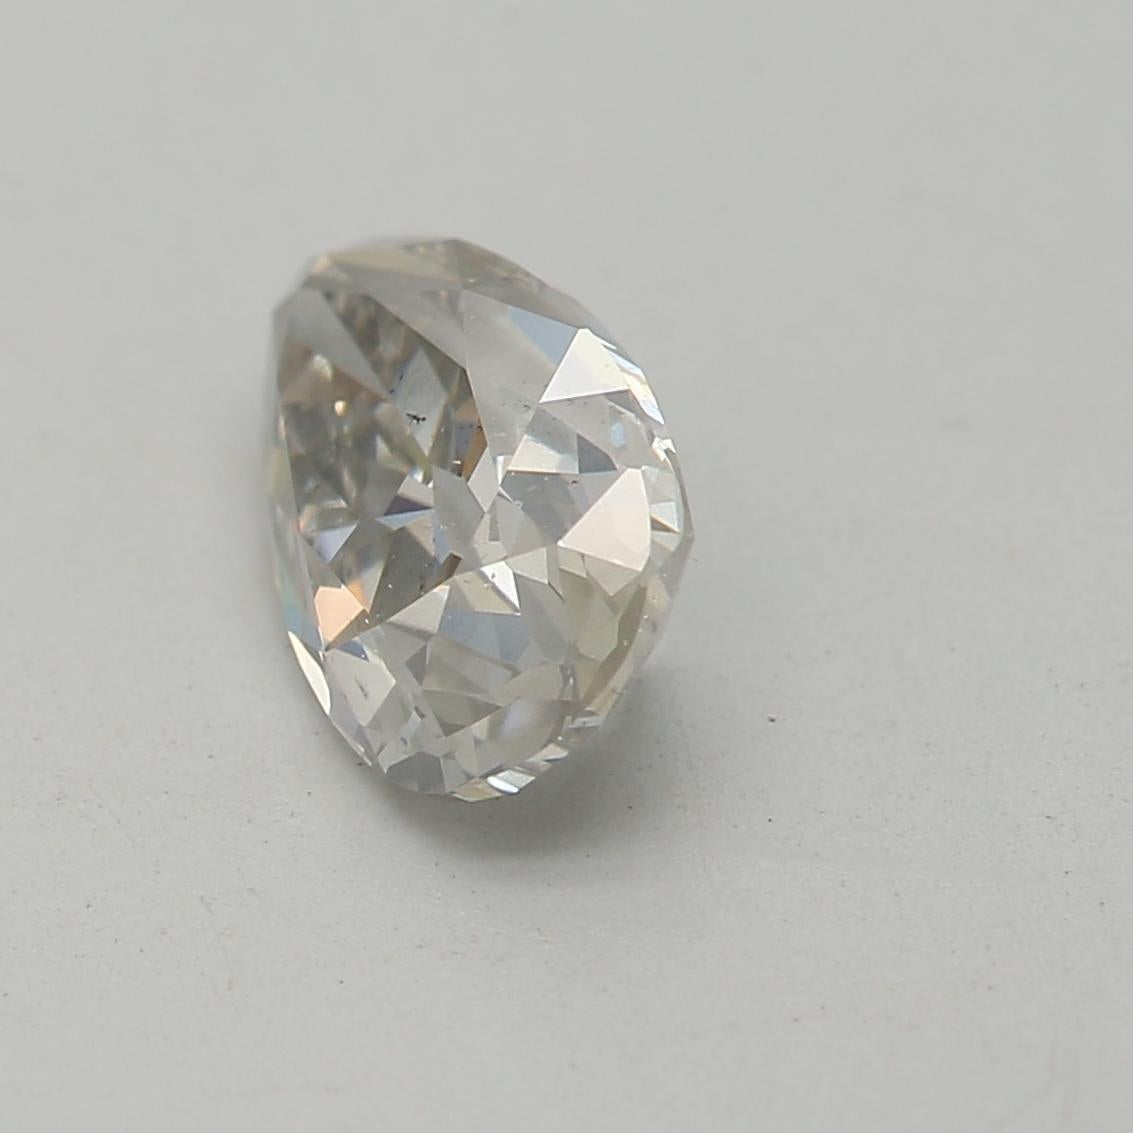 Pear Cut 0.92 Carat Fancy Light Gray Pear cut diamond SI2 Clarity GIA Certified For Sale